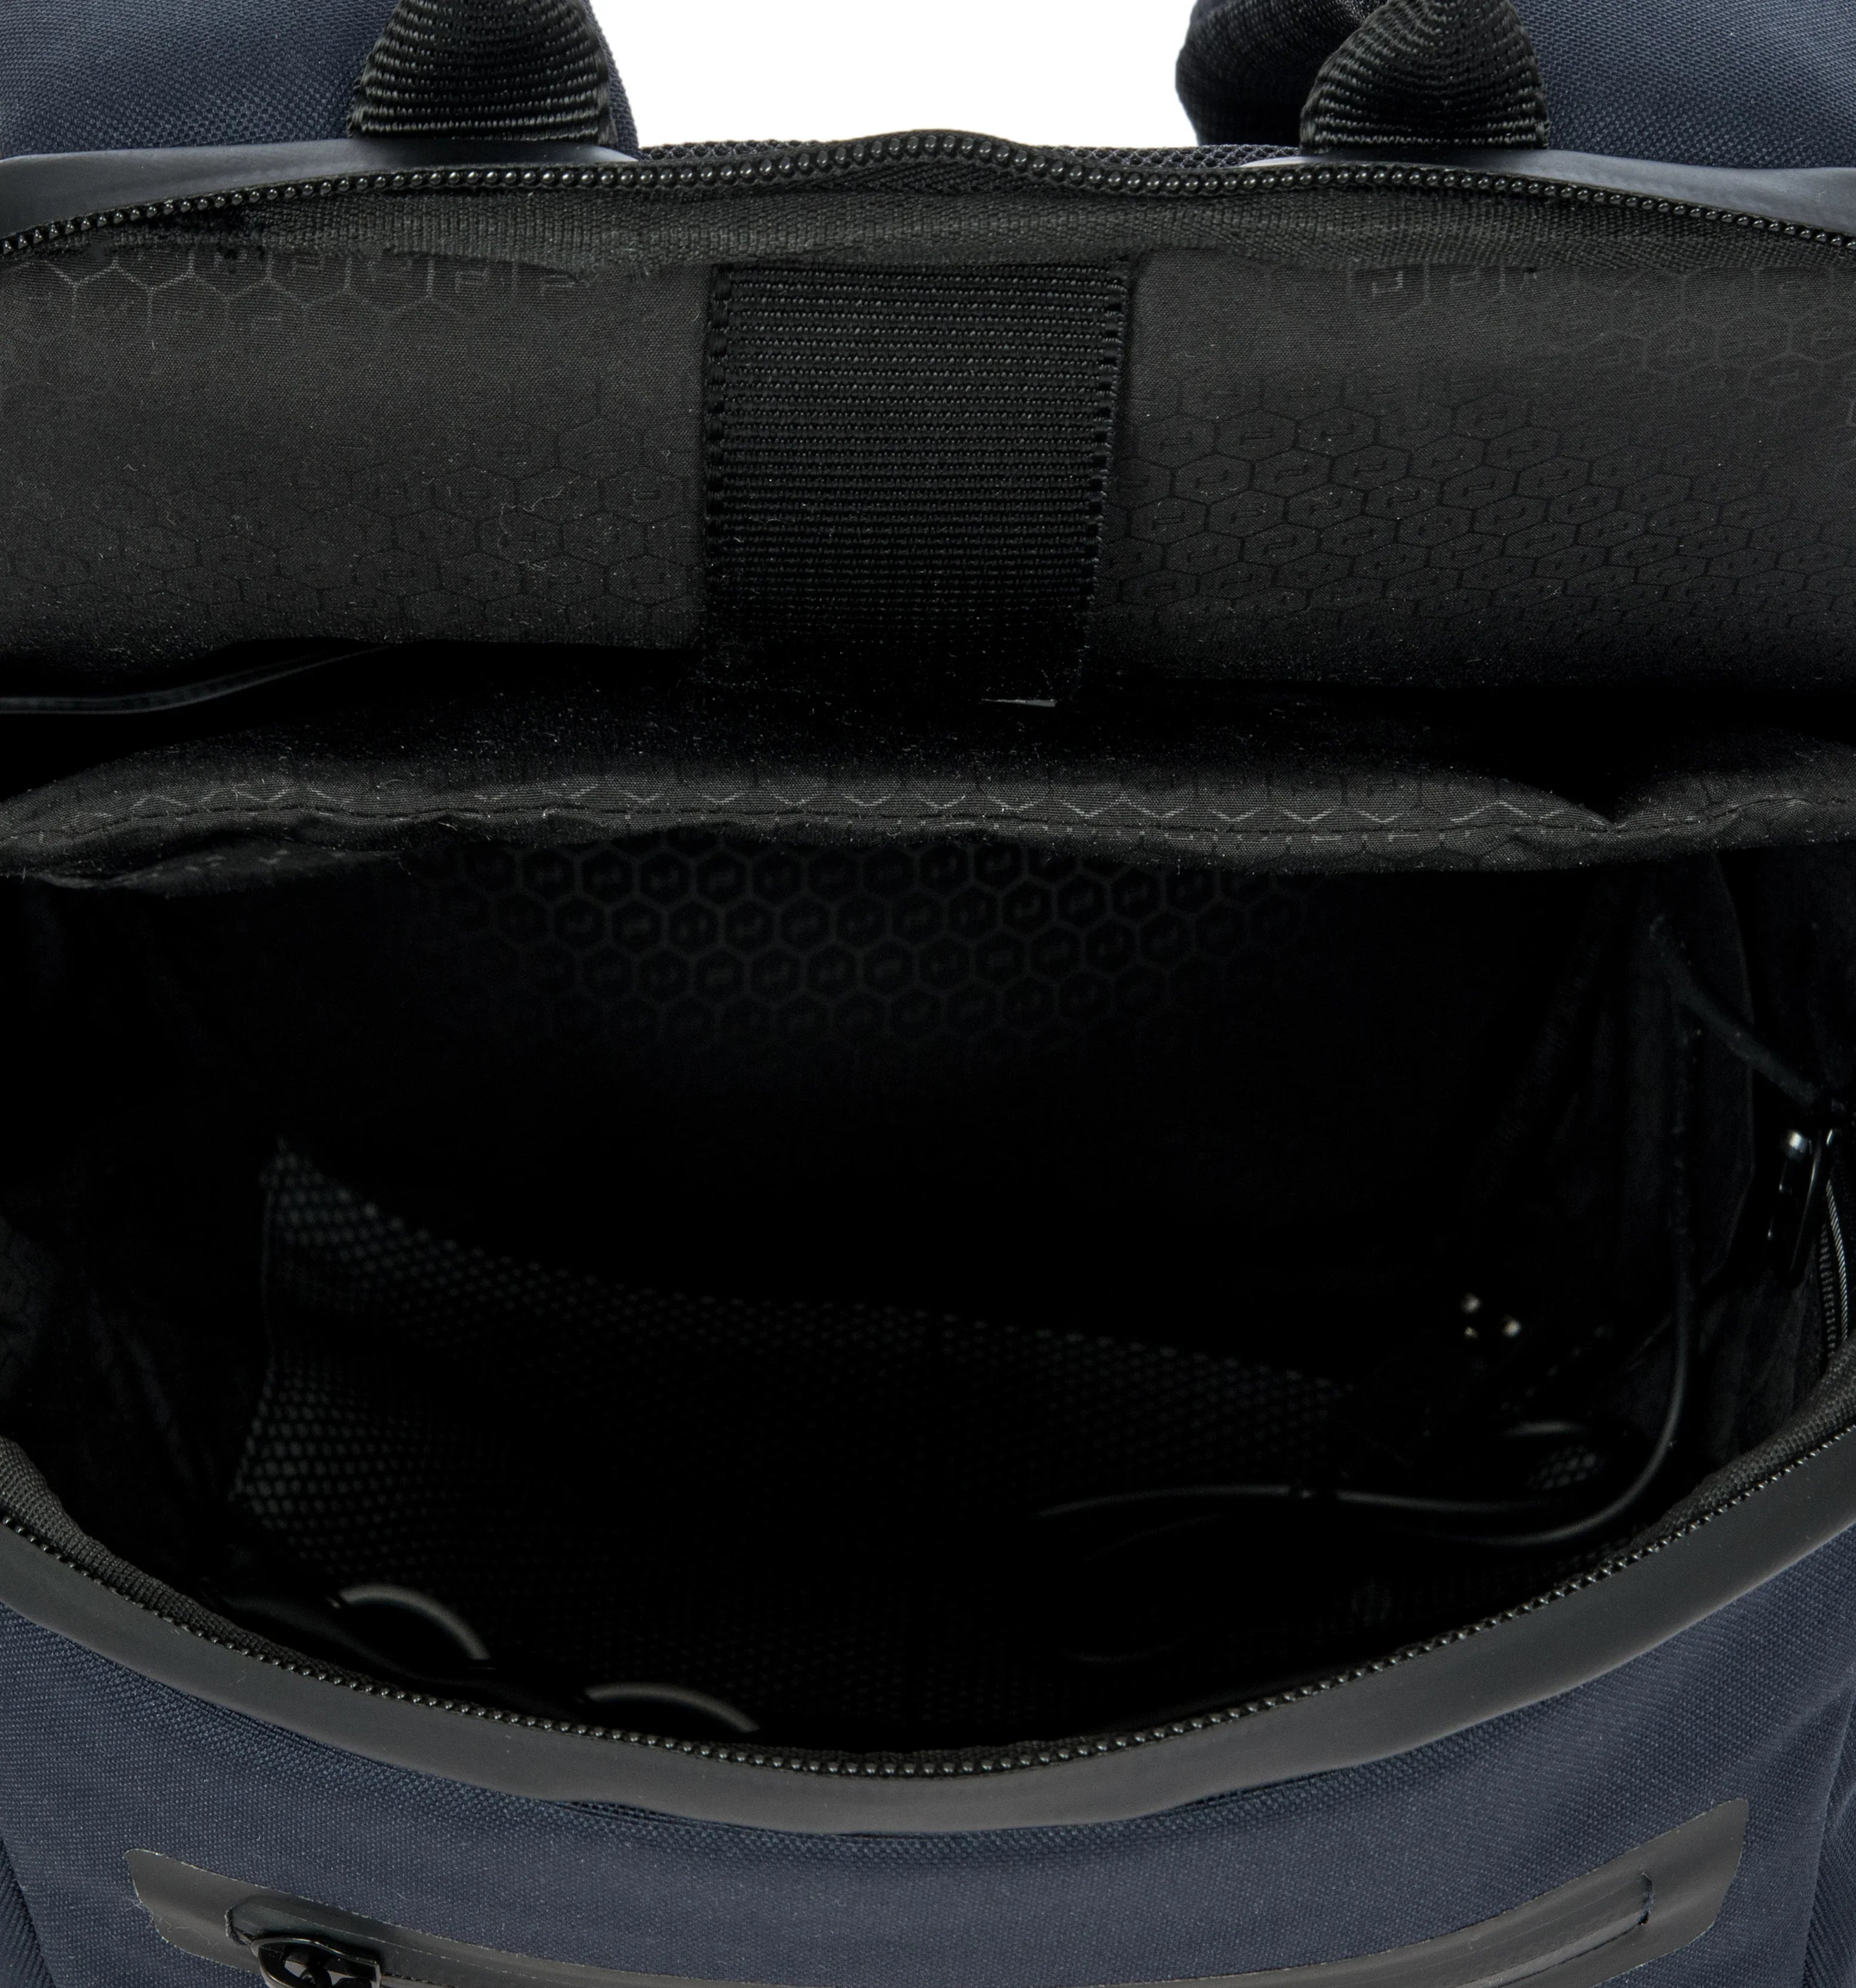 Porsche Design Urban Eco Backpack XS 40 cm - Black